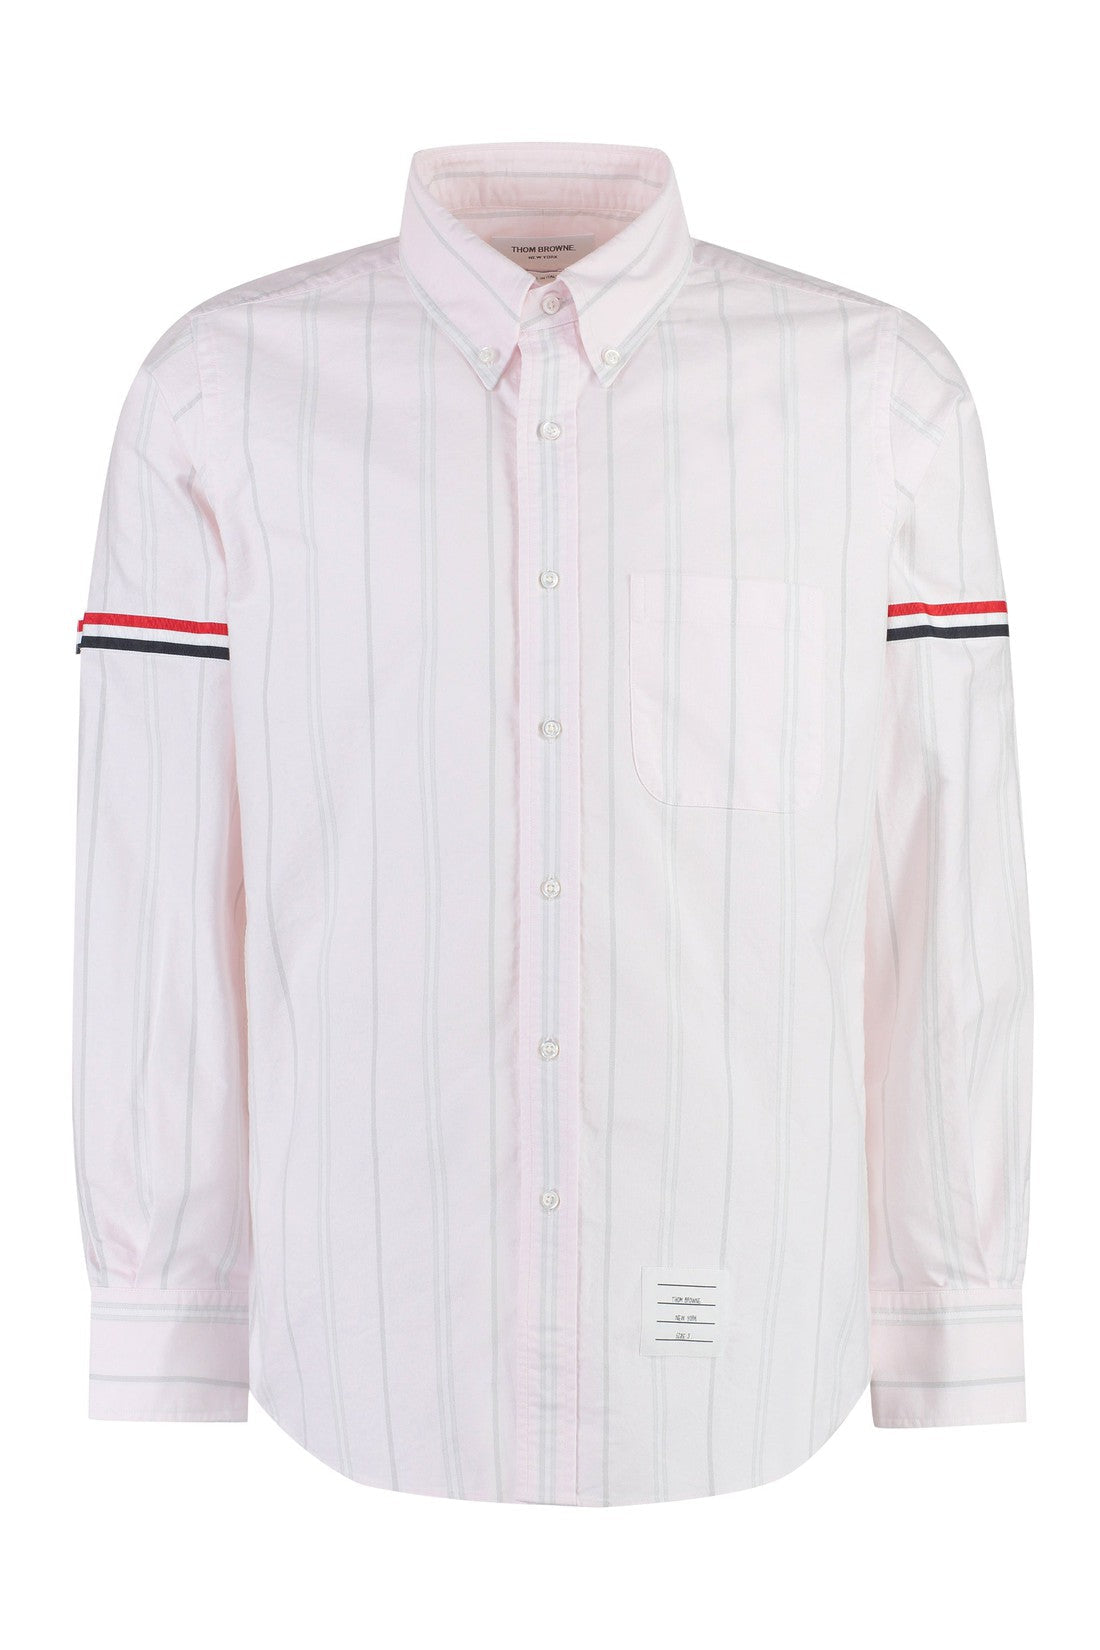 Thom Browne-OUTLET-SALE-Striped cotton shirt-ARCHIVIST